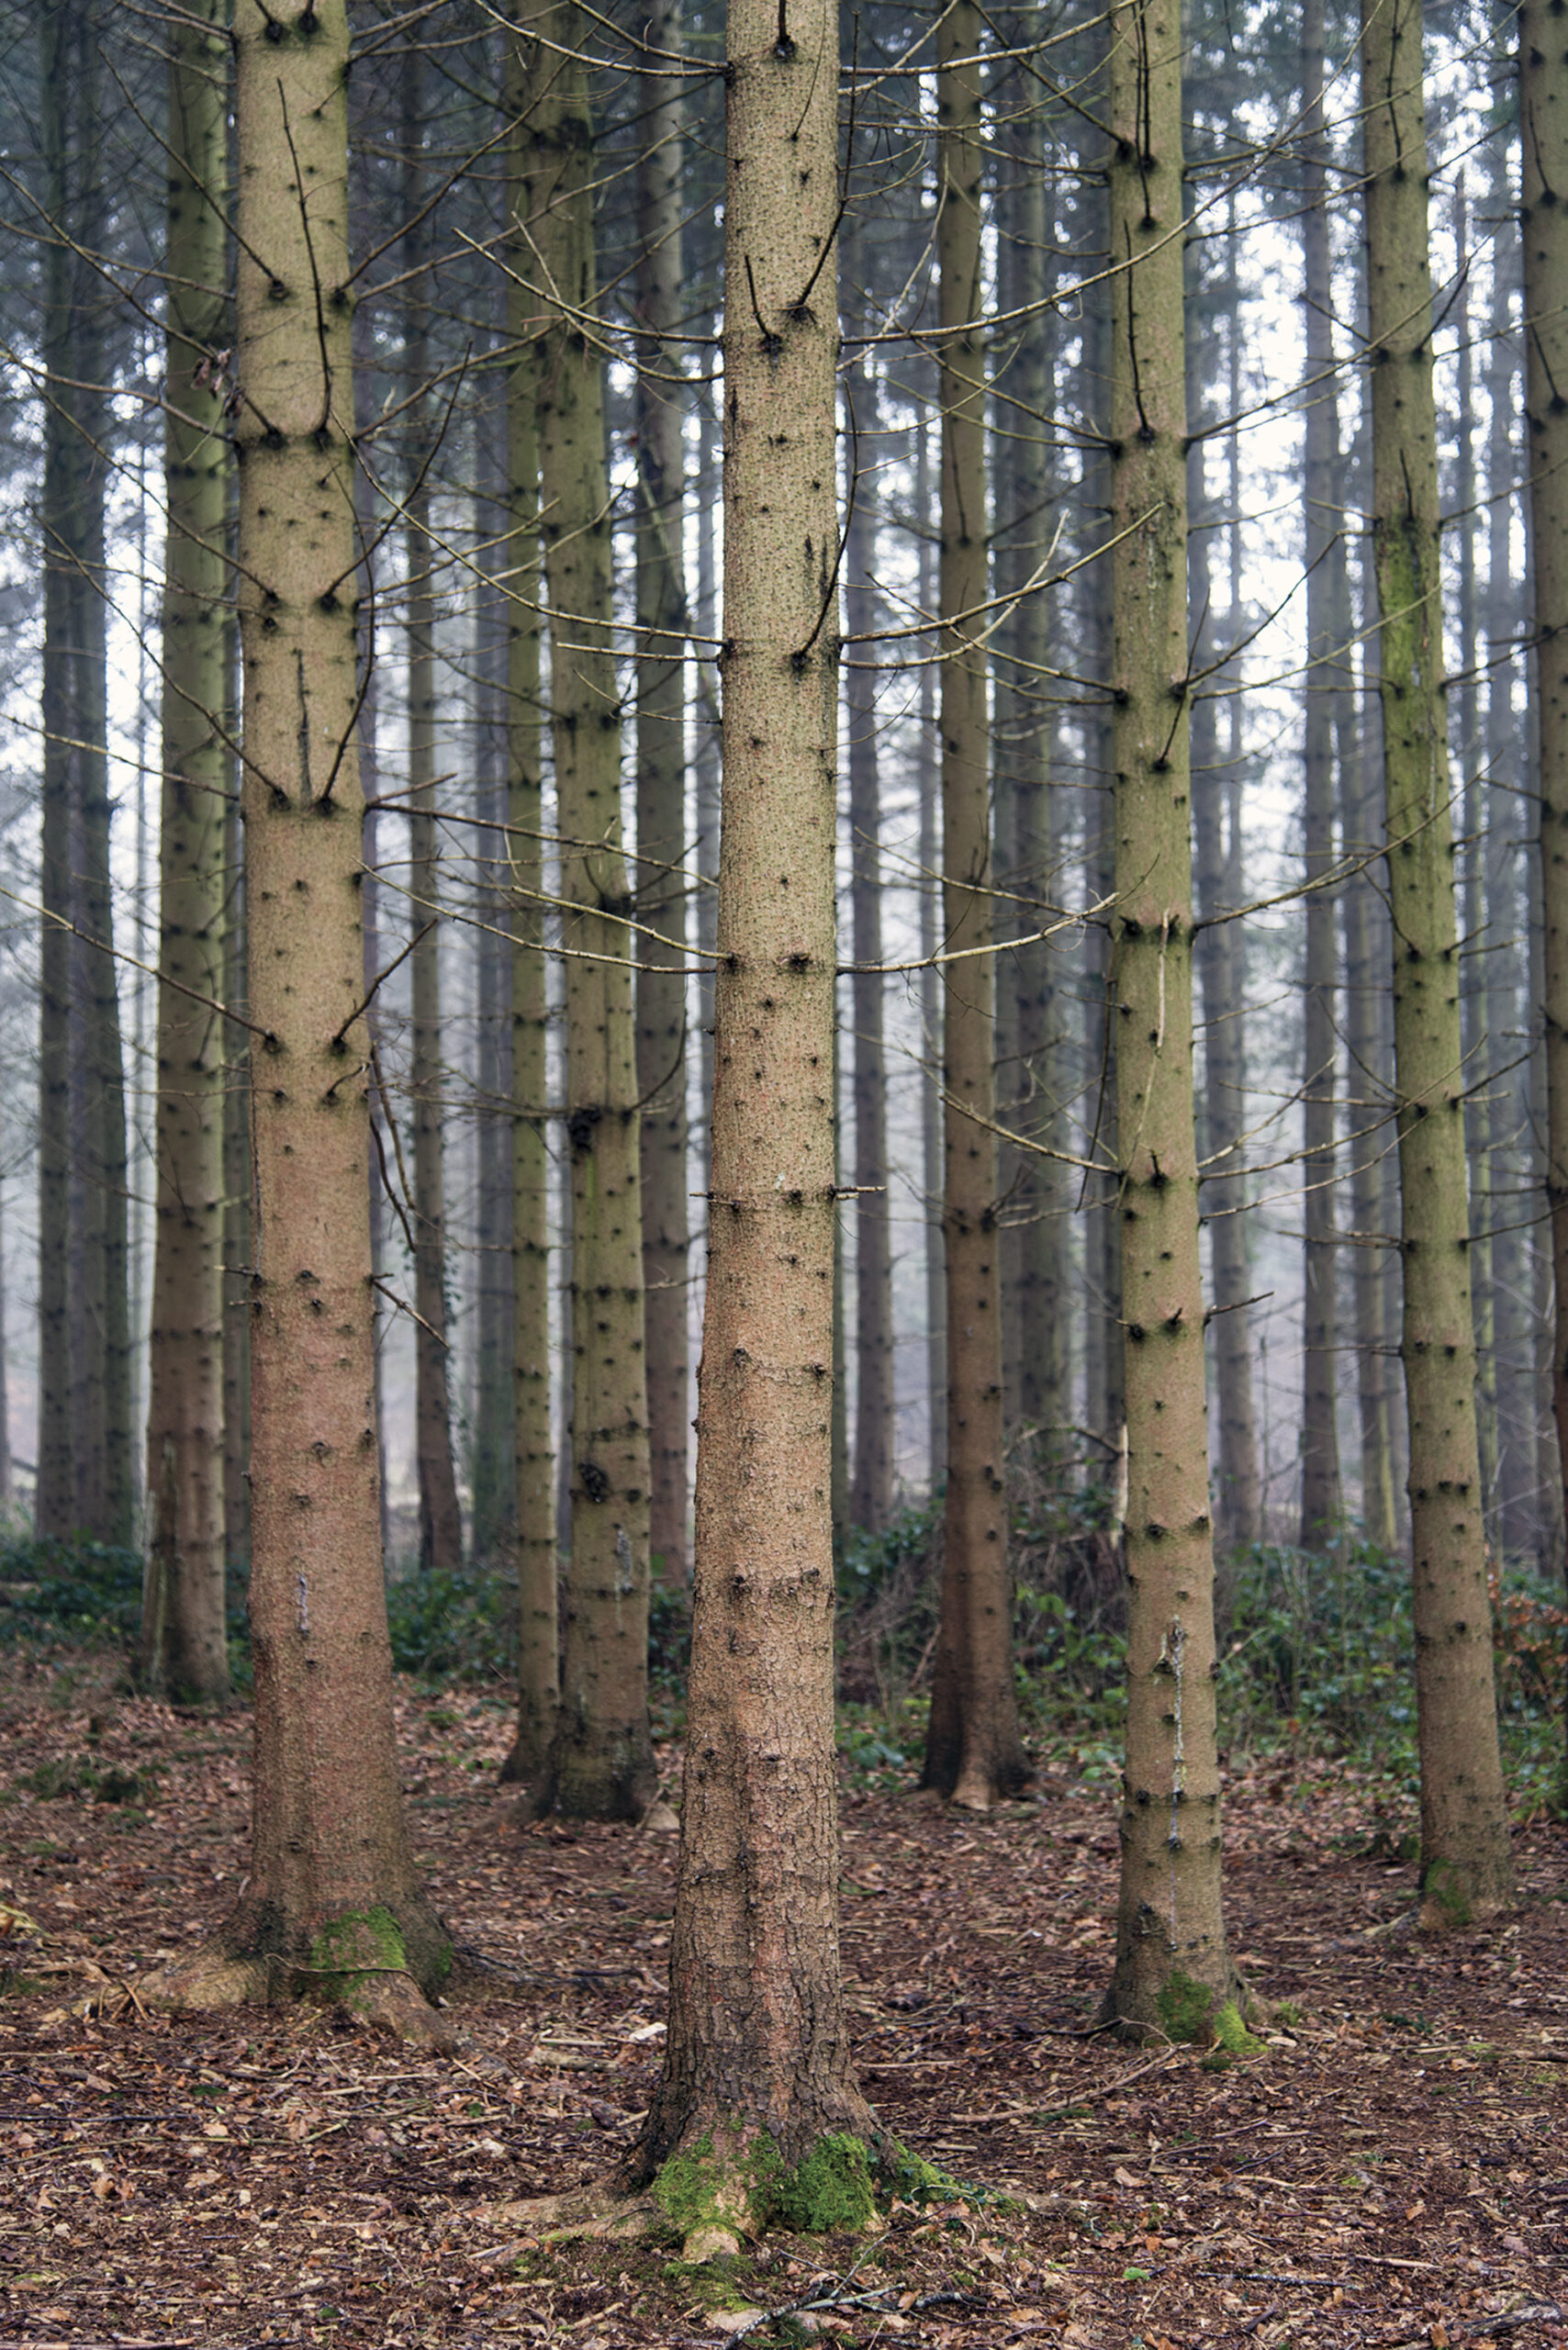 Columnar pines in Nant Mill Wood